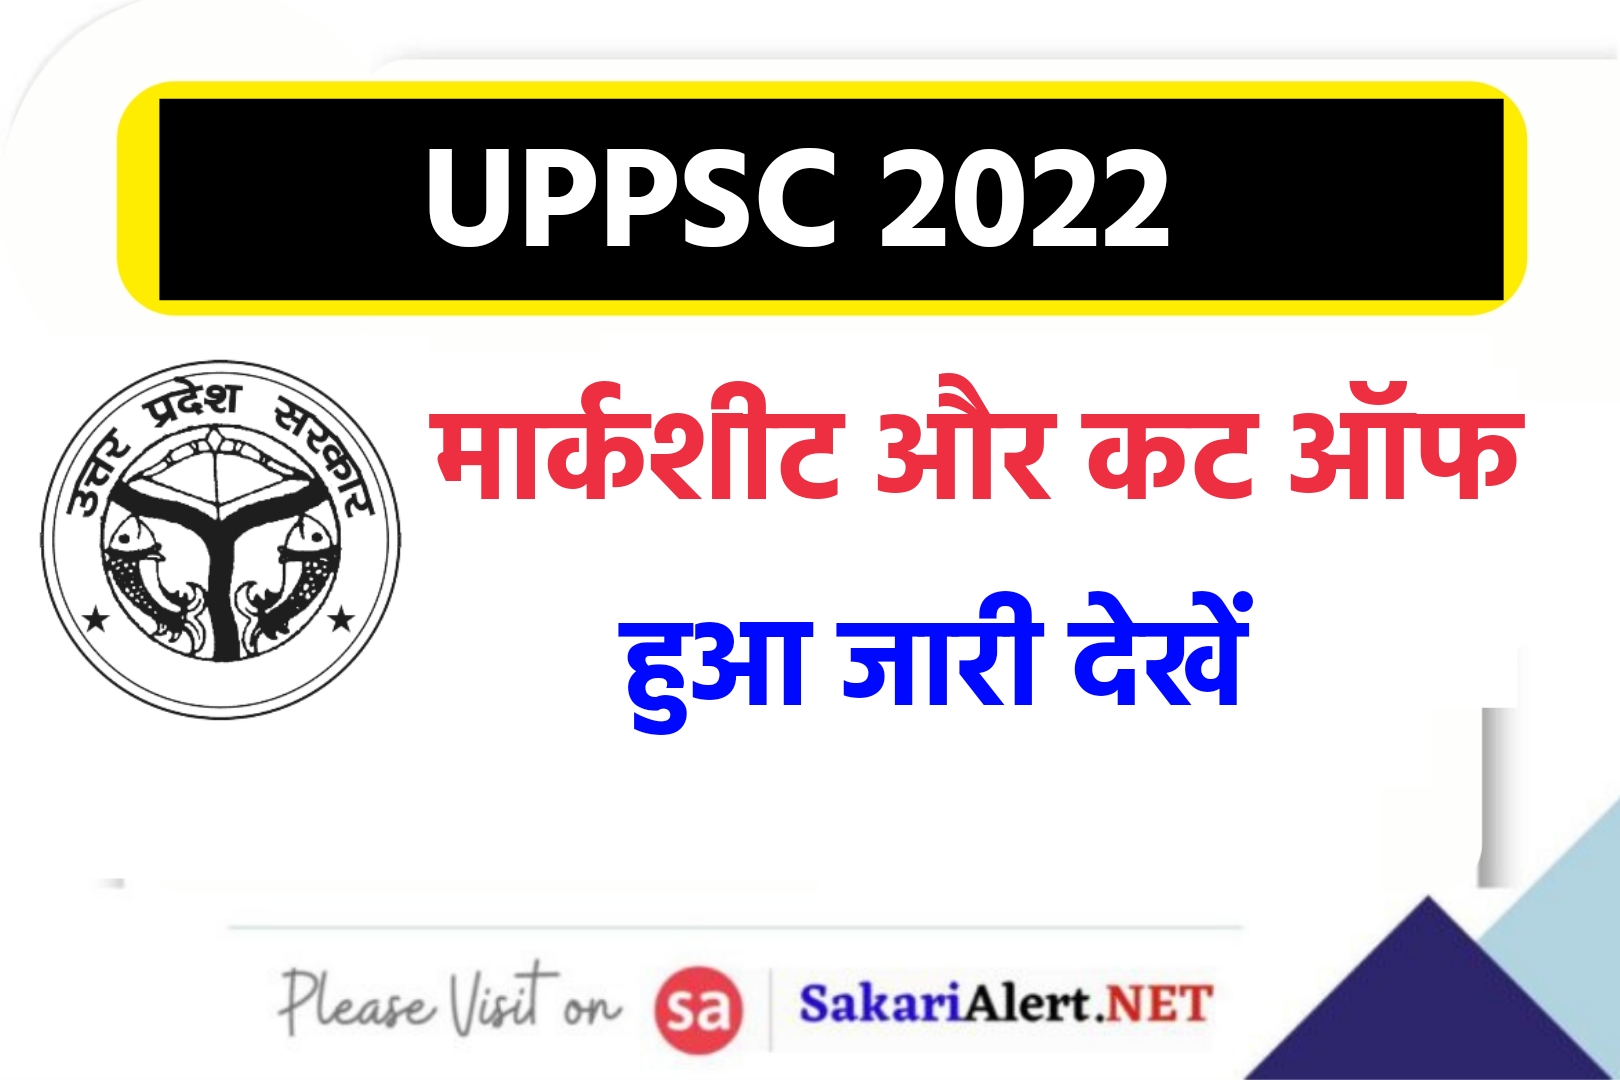 UPPSC 2022 Marks and Cutoff